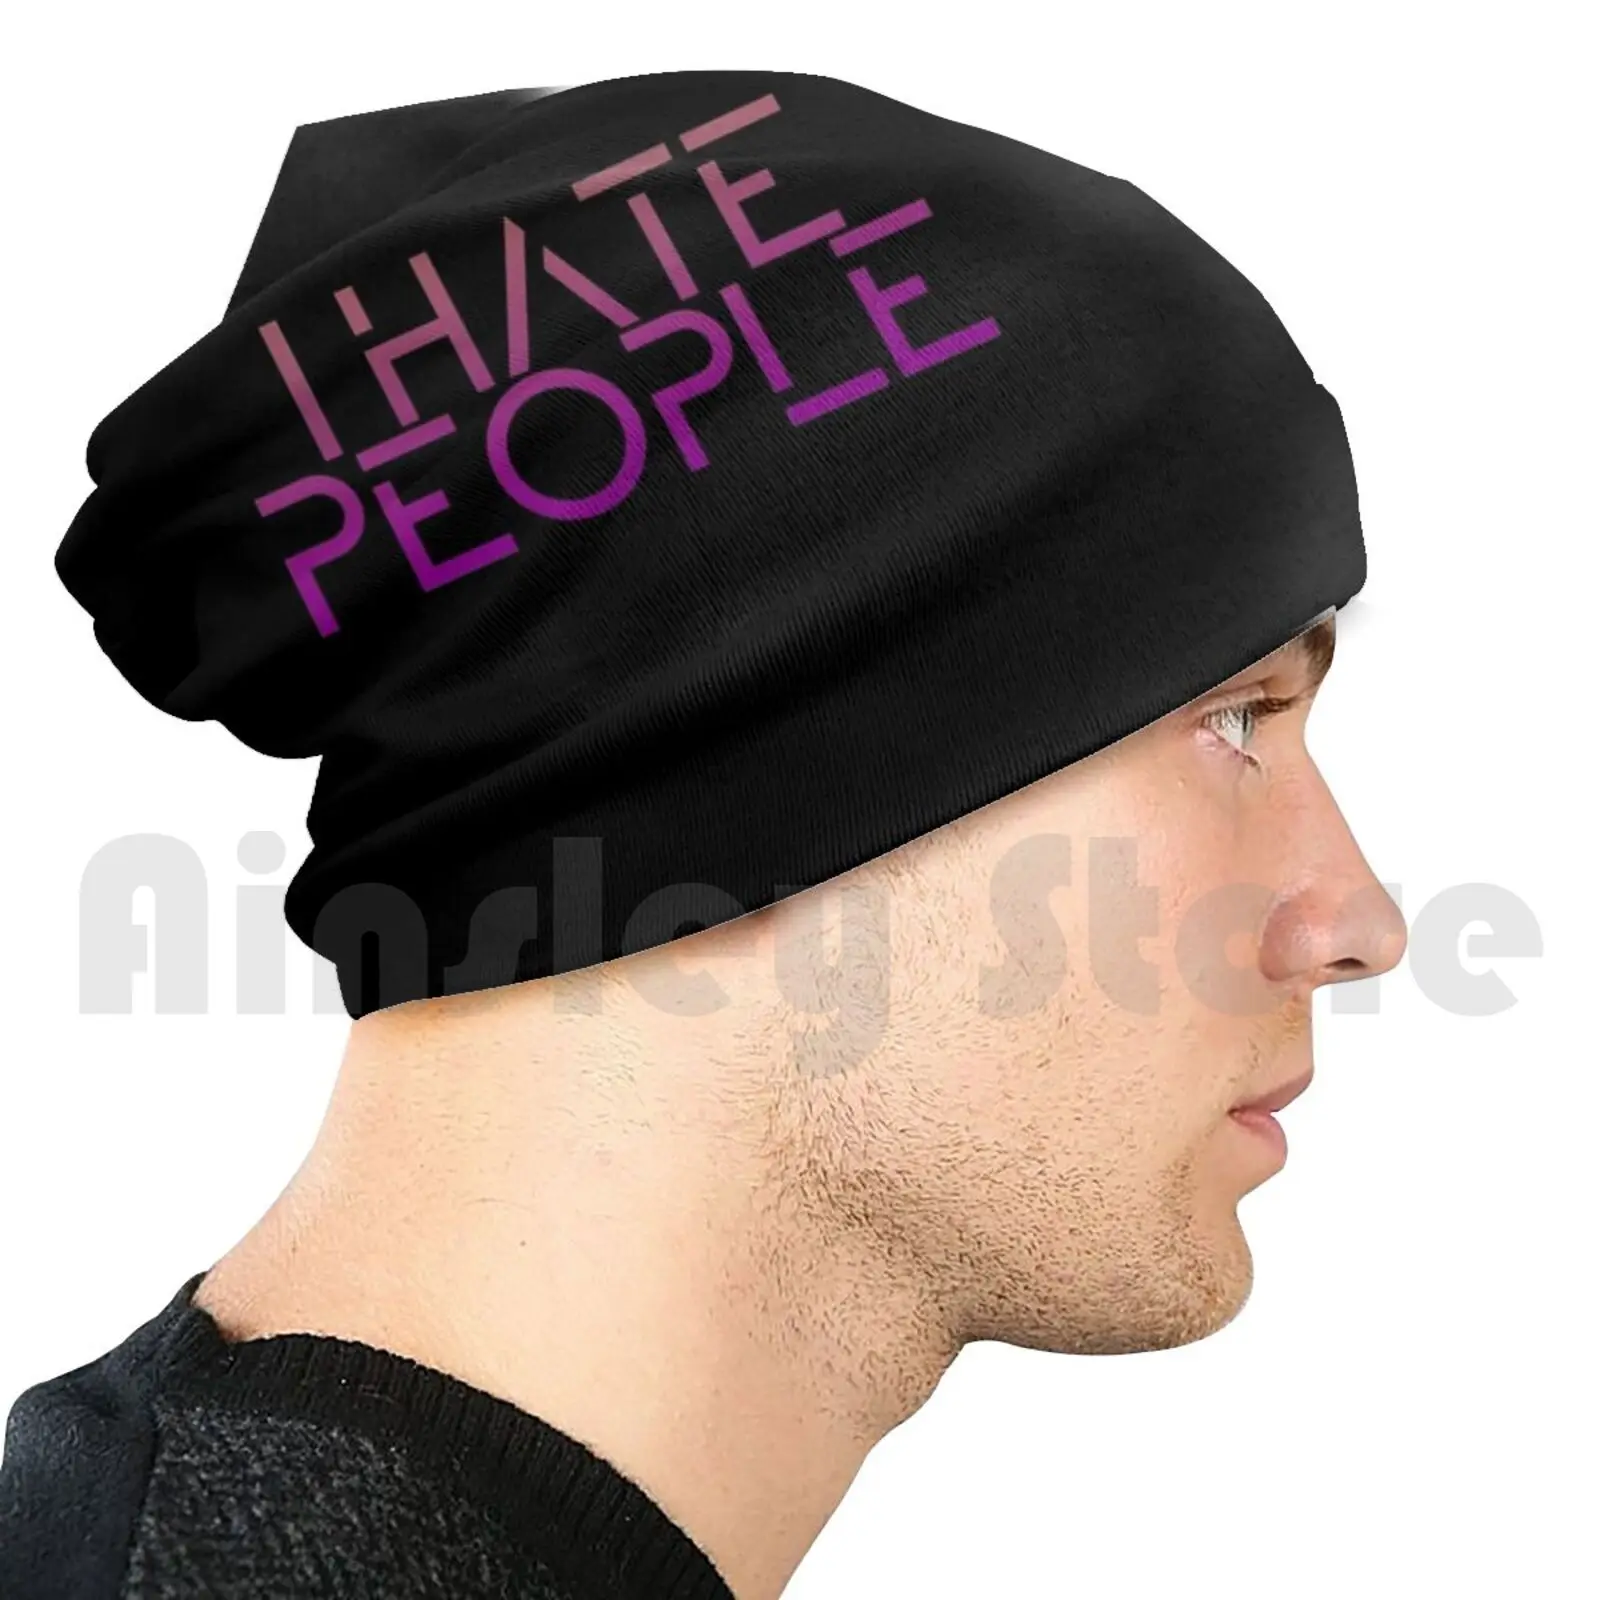 

I Hate People забавные шапки с цитатами пуловер Кепка удобный Unny I Hate People Кемпинг Tumblr